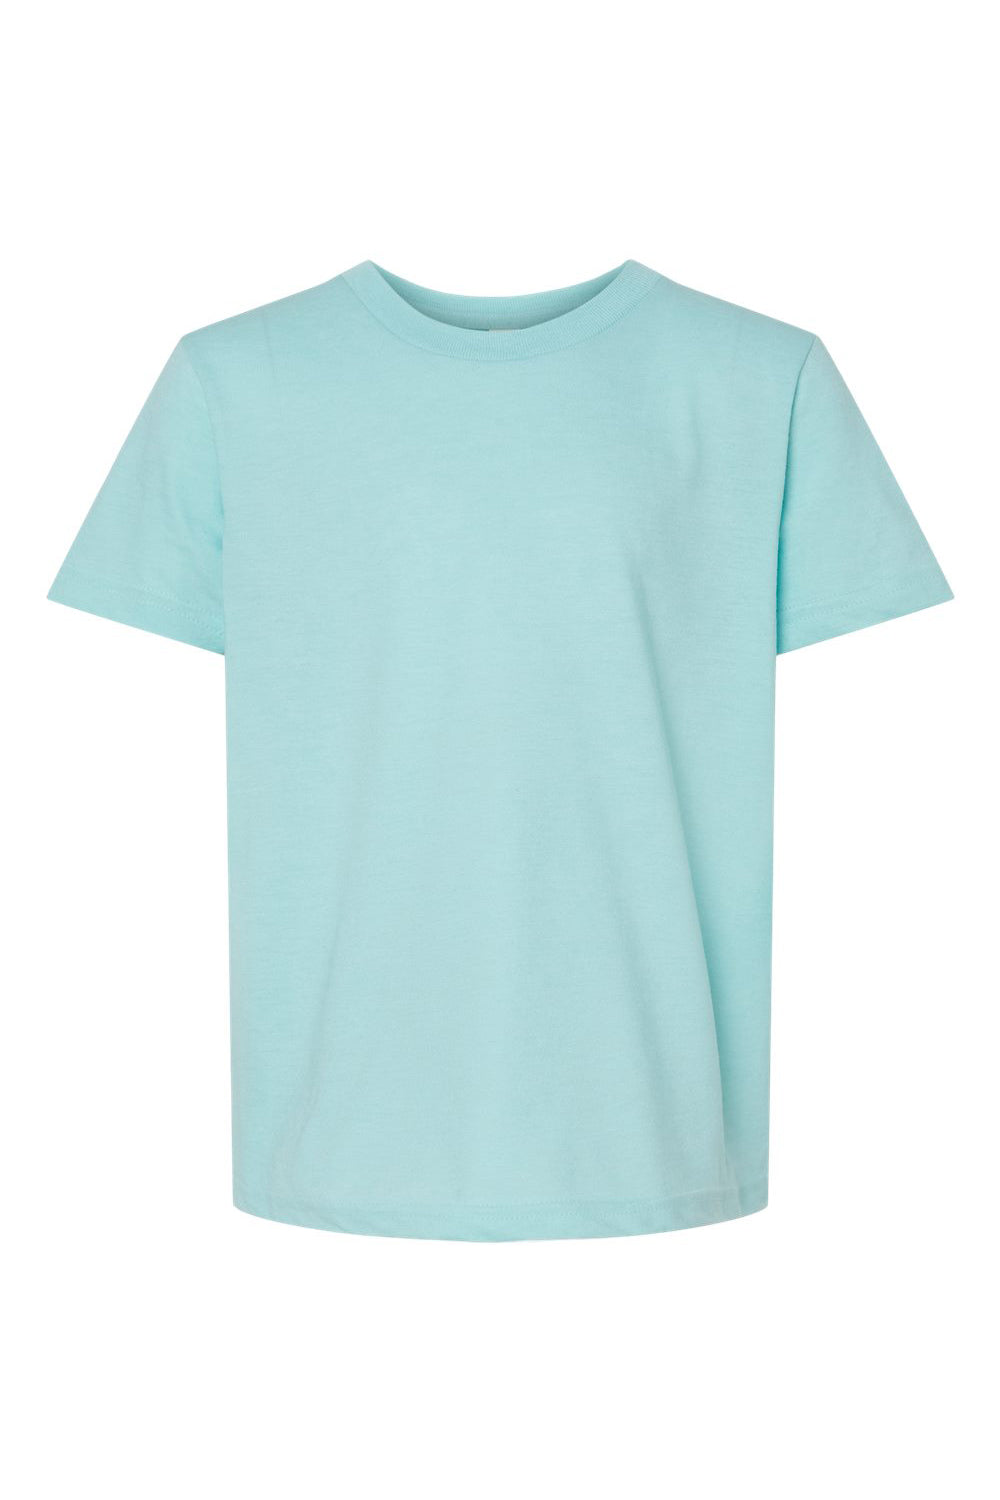 Tultex 235 Youth Fine Jersey Short Sleeve Crewneck T-Shirt Heather Purist Blue Flat Front